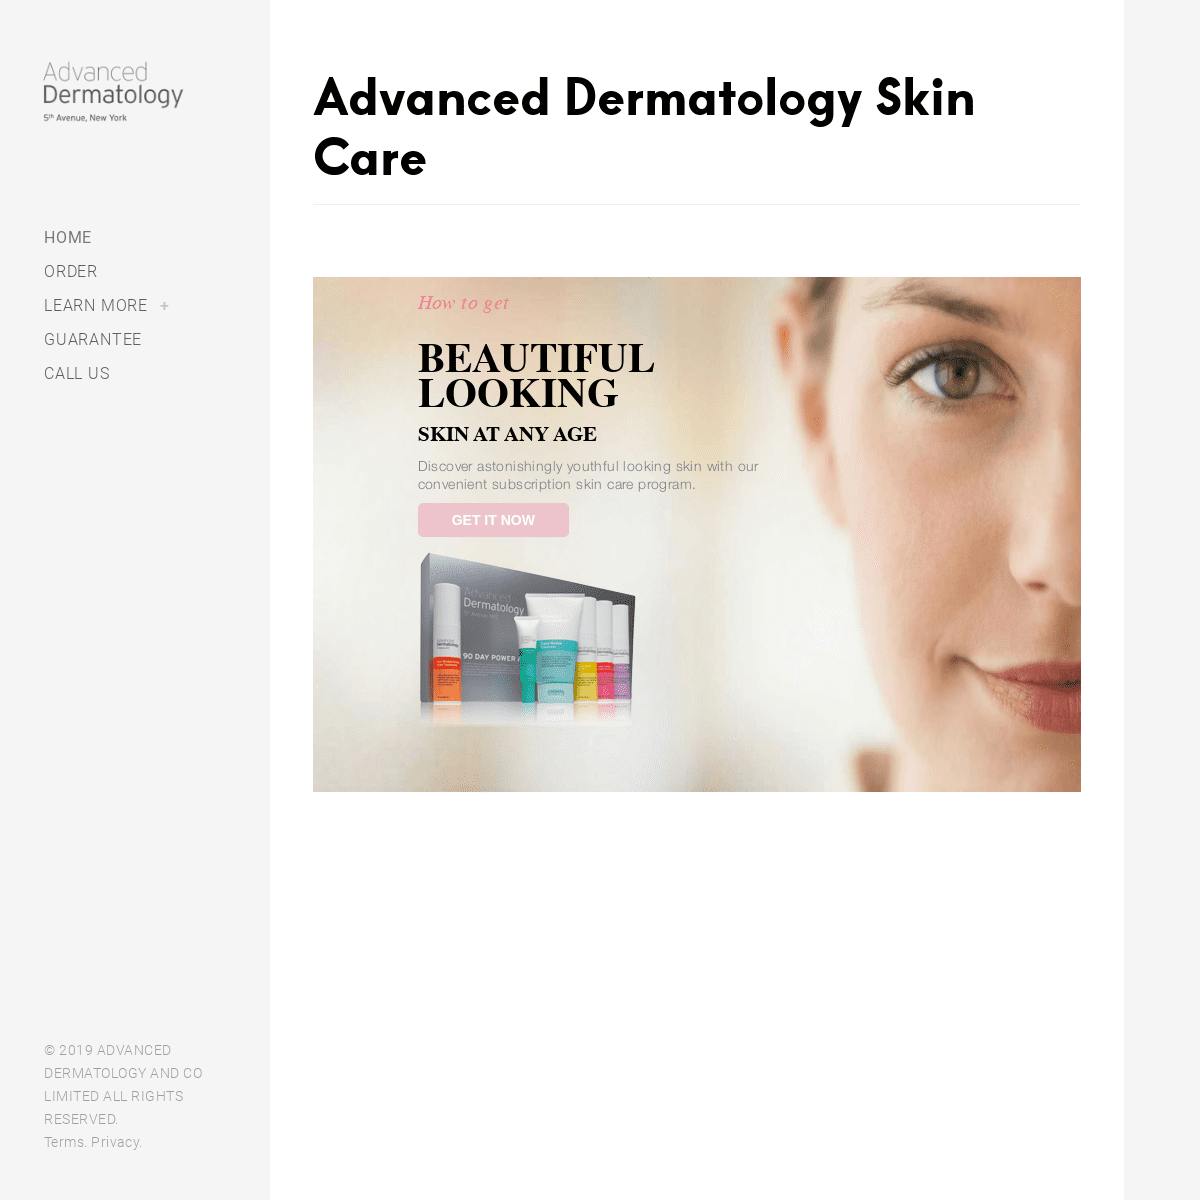 Advanced Dermatology Skin Care